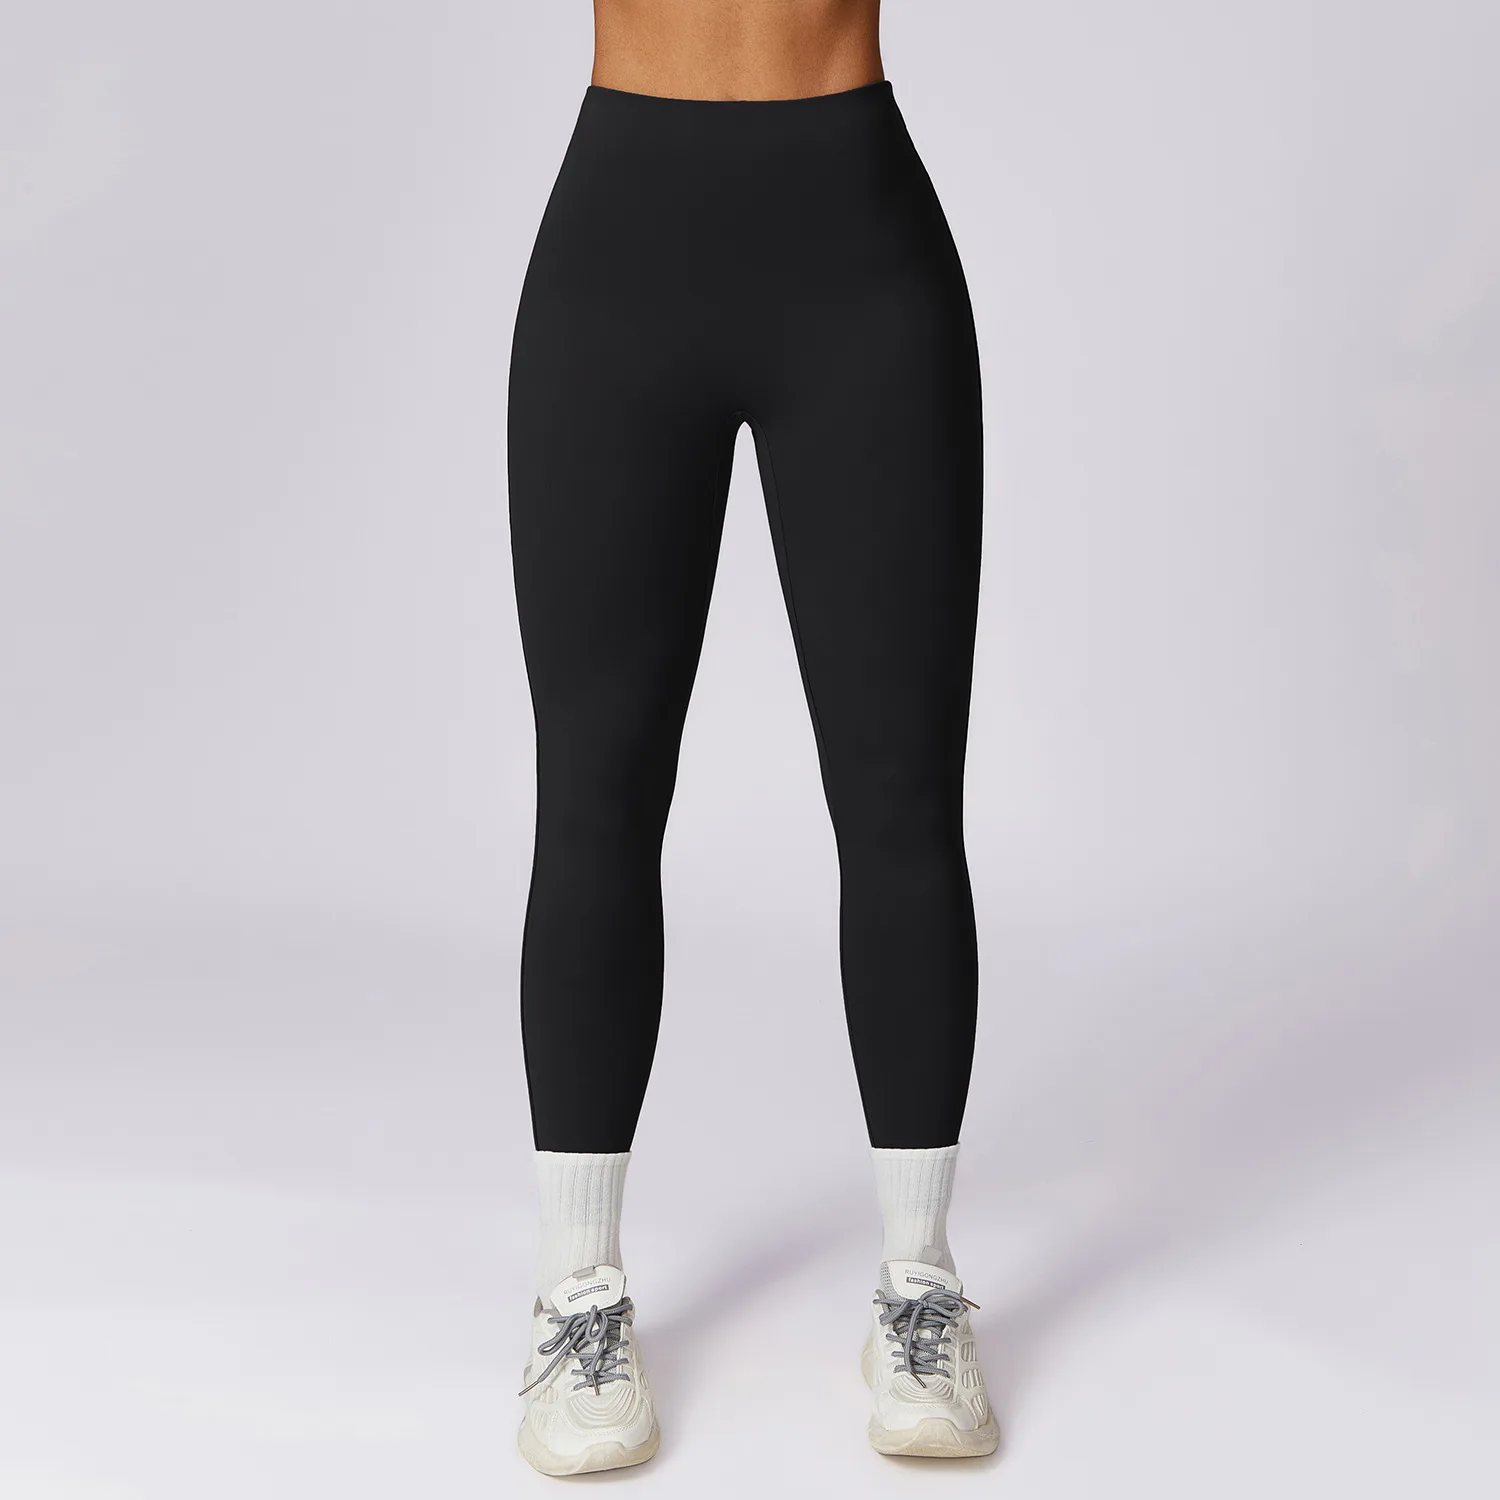 Customize Gym Leggings Butt Lifting High Waist Workout Yoga Pants Active Sports Fitness Gym Sportswear Women Yoga Leggings